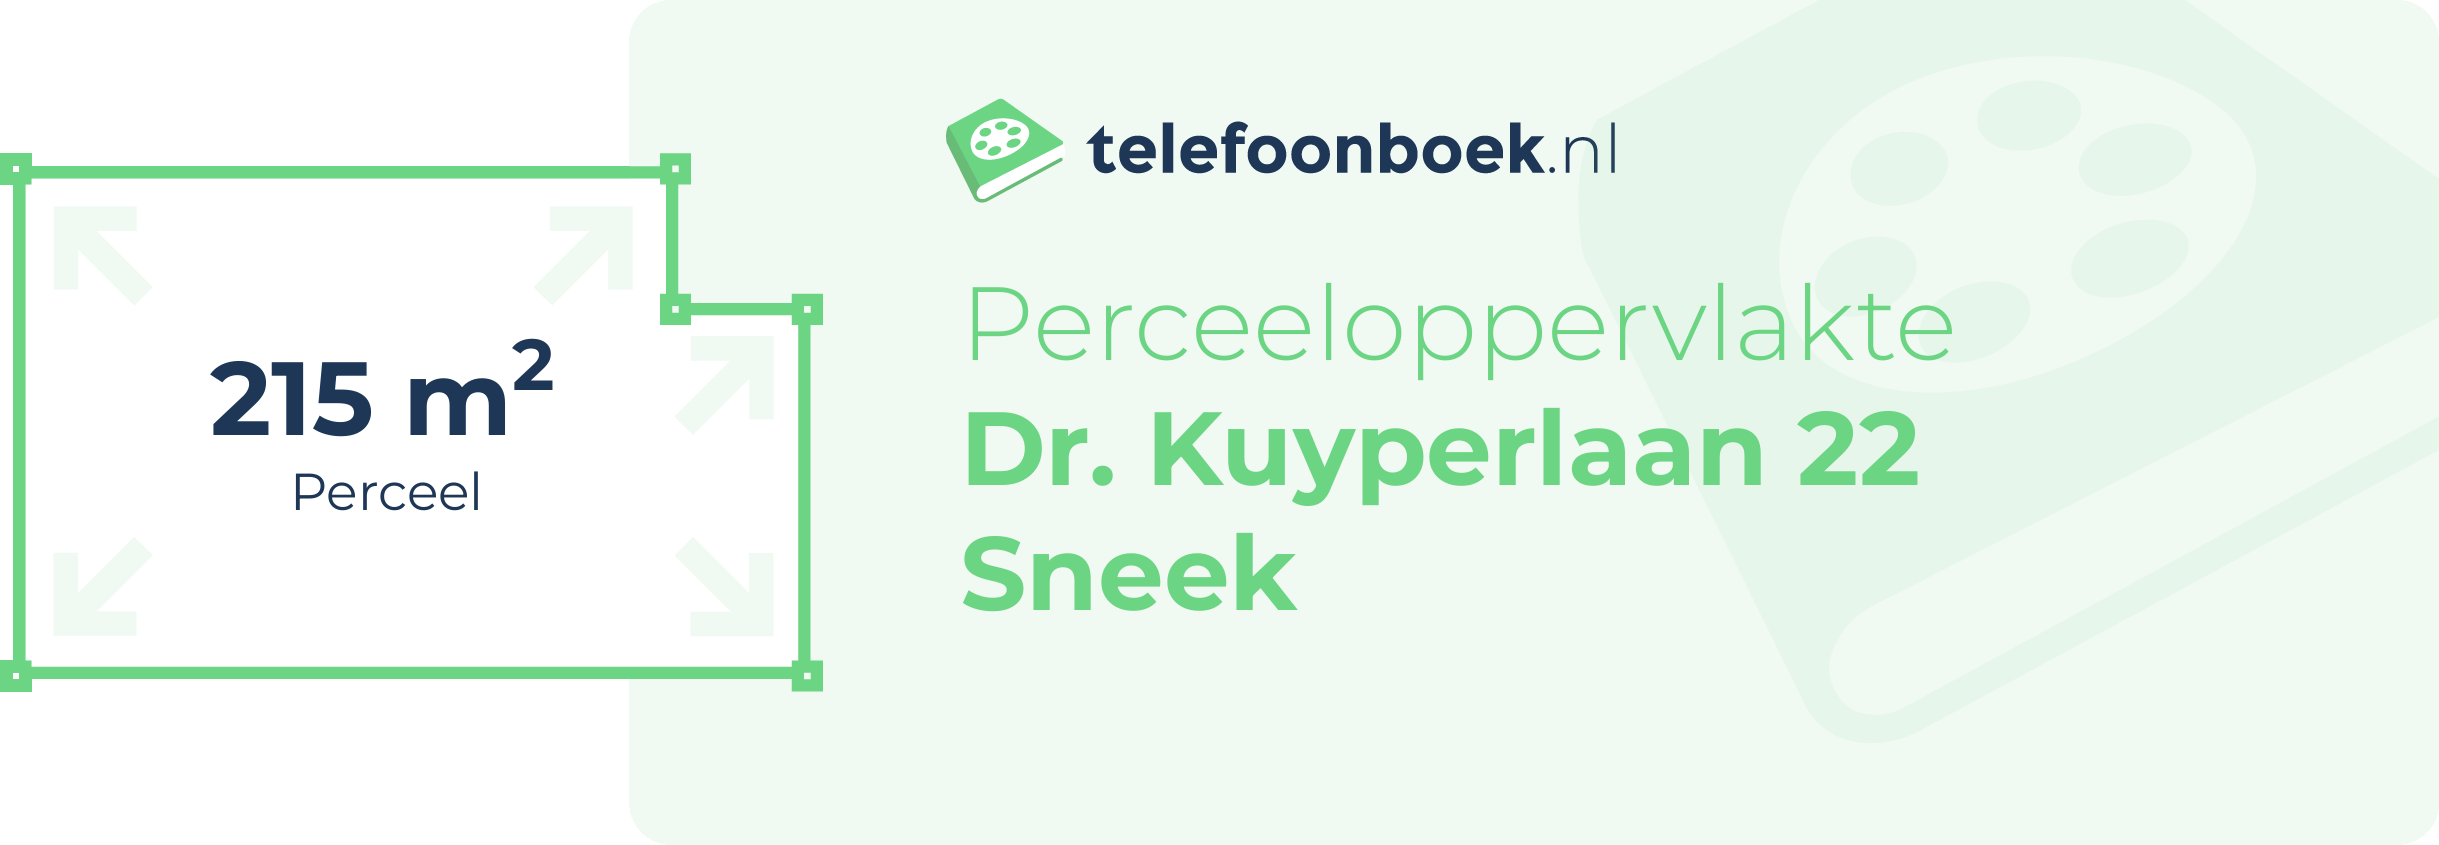 Perceeloppervlakte Dr. Kuyperlaan 22 Sneek